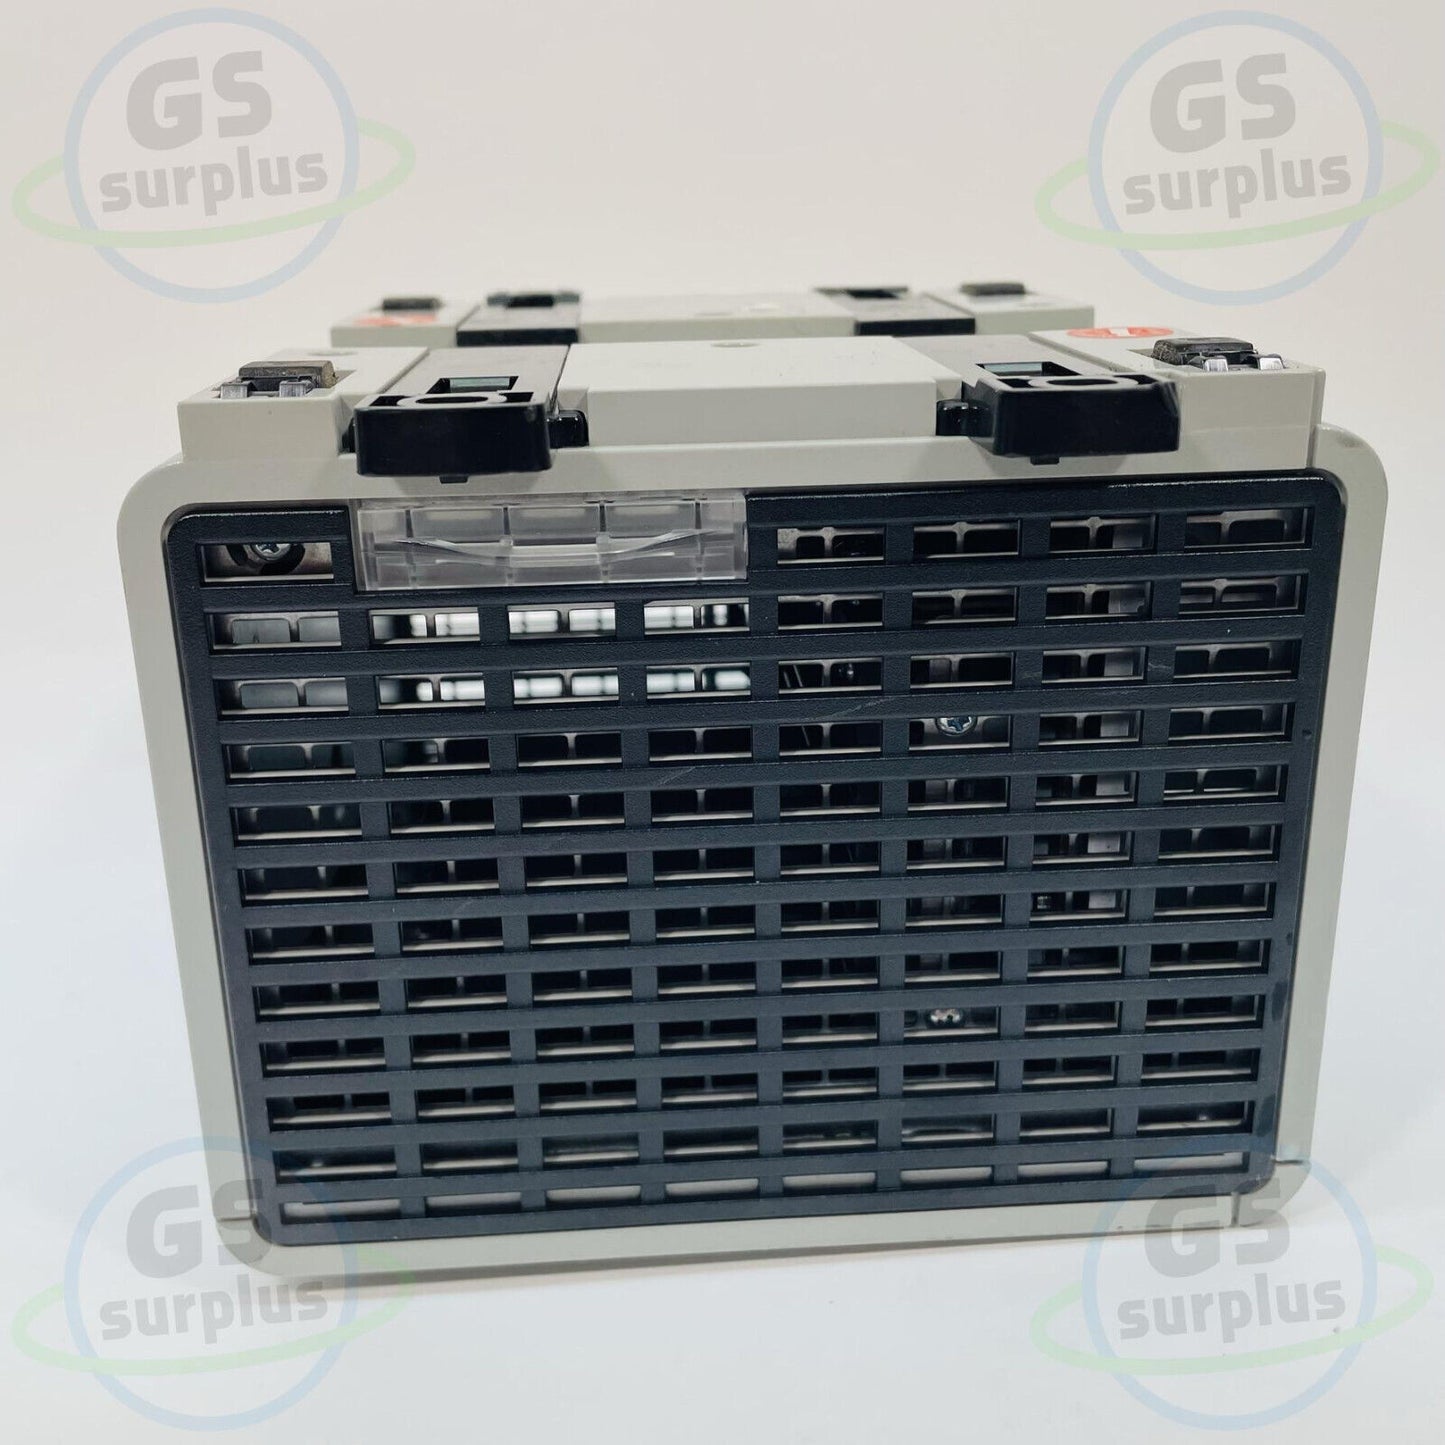 Allen Bradley 1783-MS10T /A Stratix 8000 Ethernet Managed Switch, (No no box)